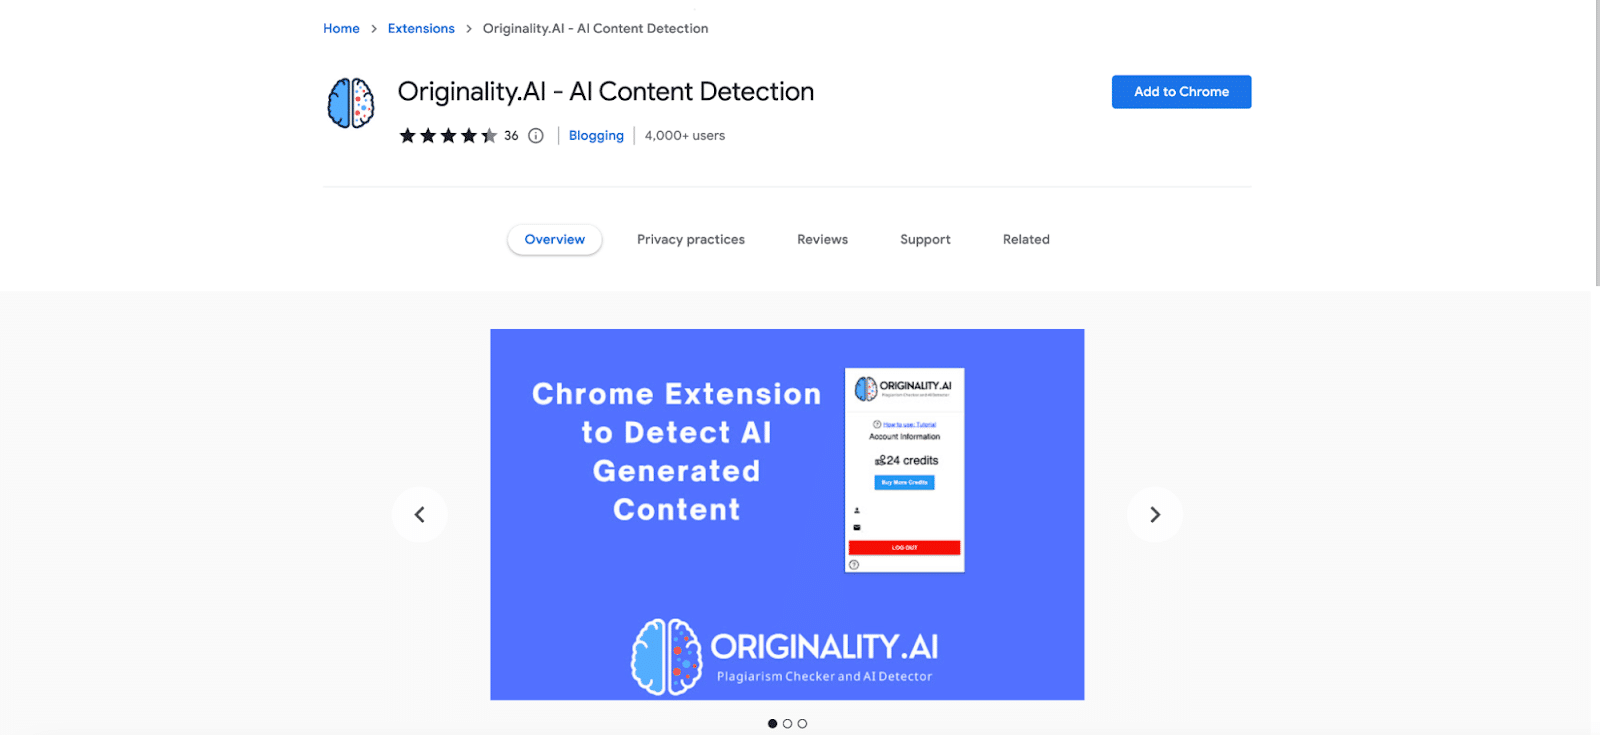 Originality.AI Chrome Erweiterung